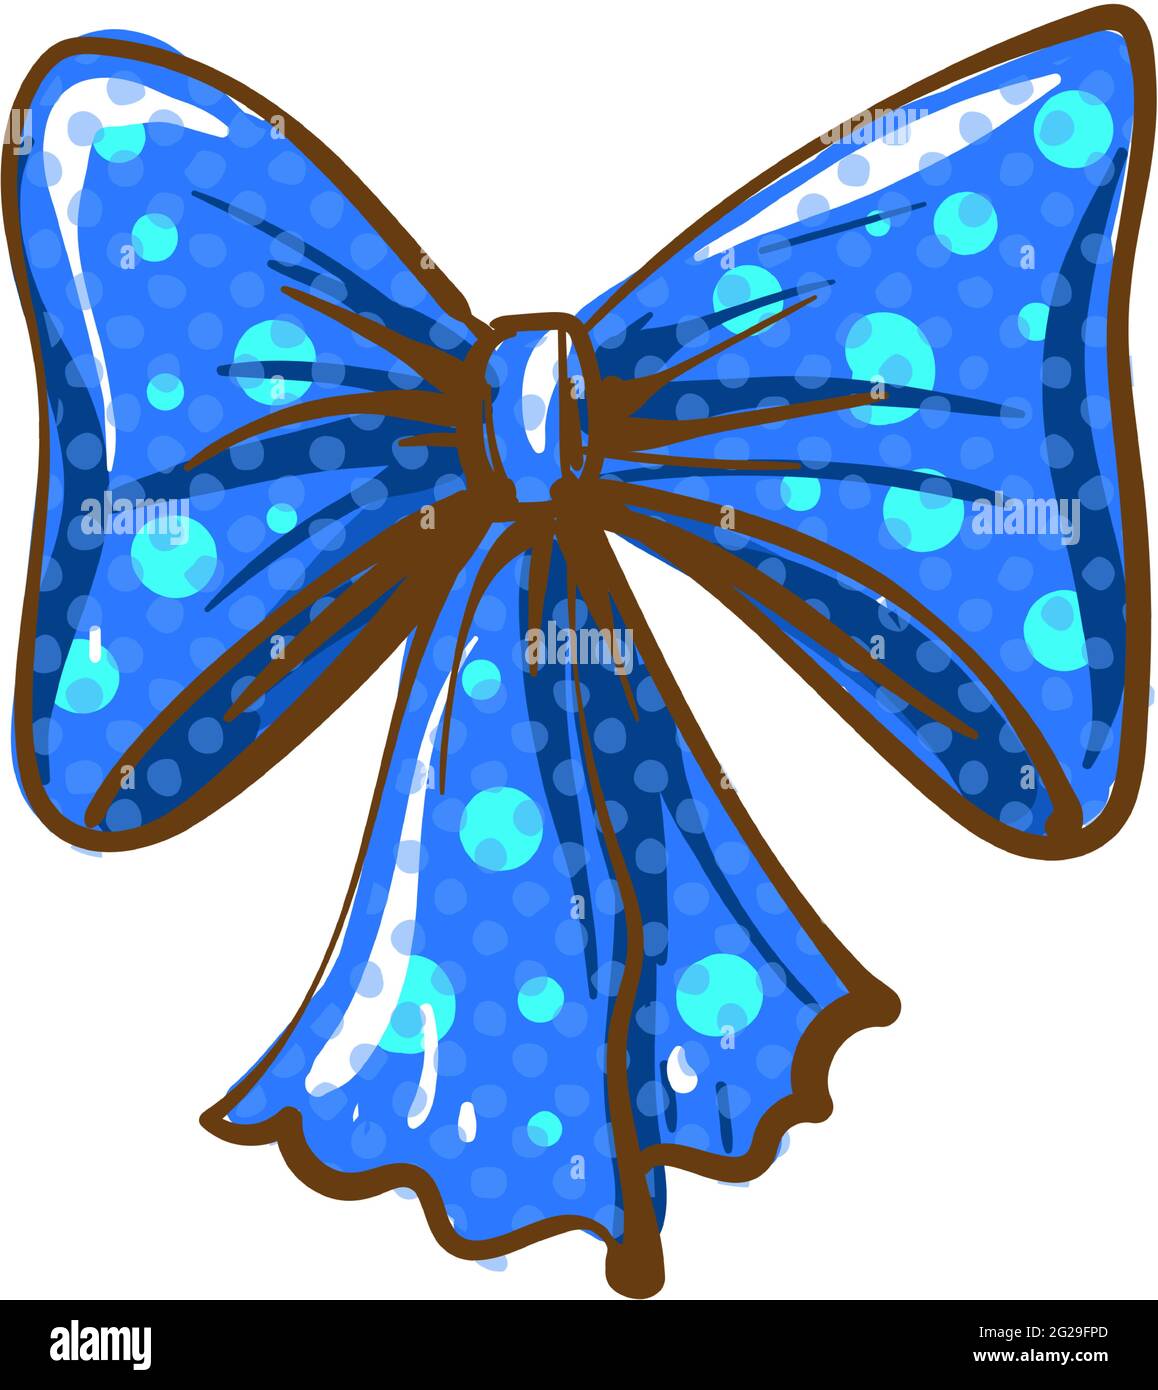 Dessin animé papillon vecteur, noeud noeud ruban bleu pointillé Image  Vectorielle Stock - Alamy